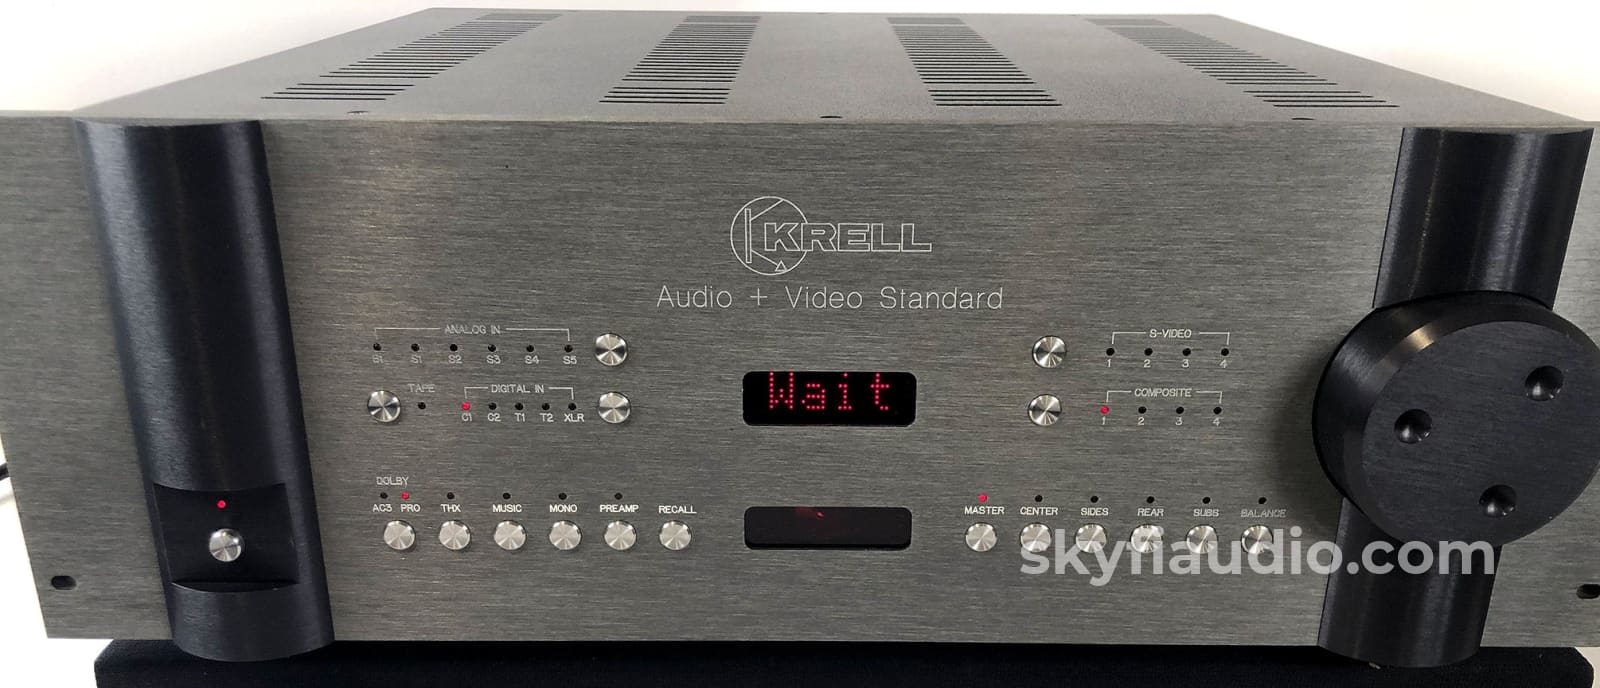 Krell Audio + Video Standard Preamp/Processor - A Well Kept Secret Preamplifier